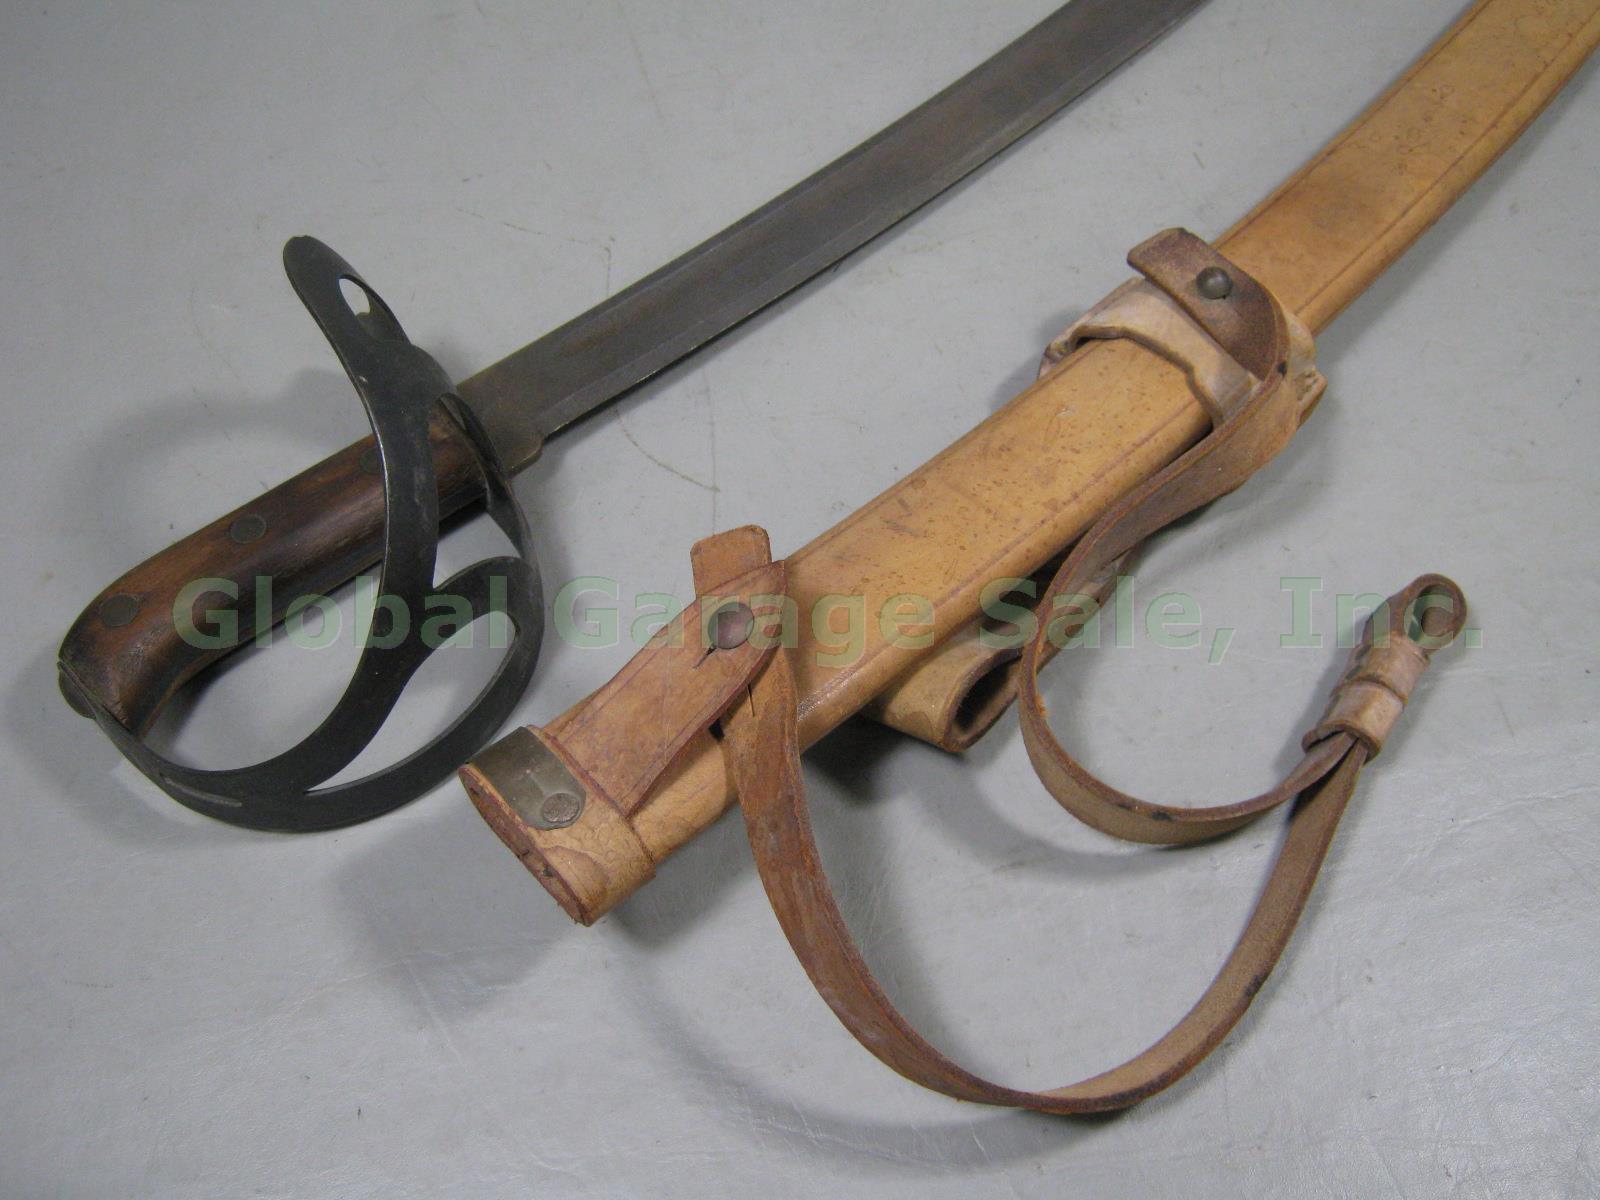 Vtg Milsco USN Navy Naval Klewang Cutlass Sword W/ Original Leather Scabbard NR! 1